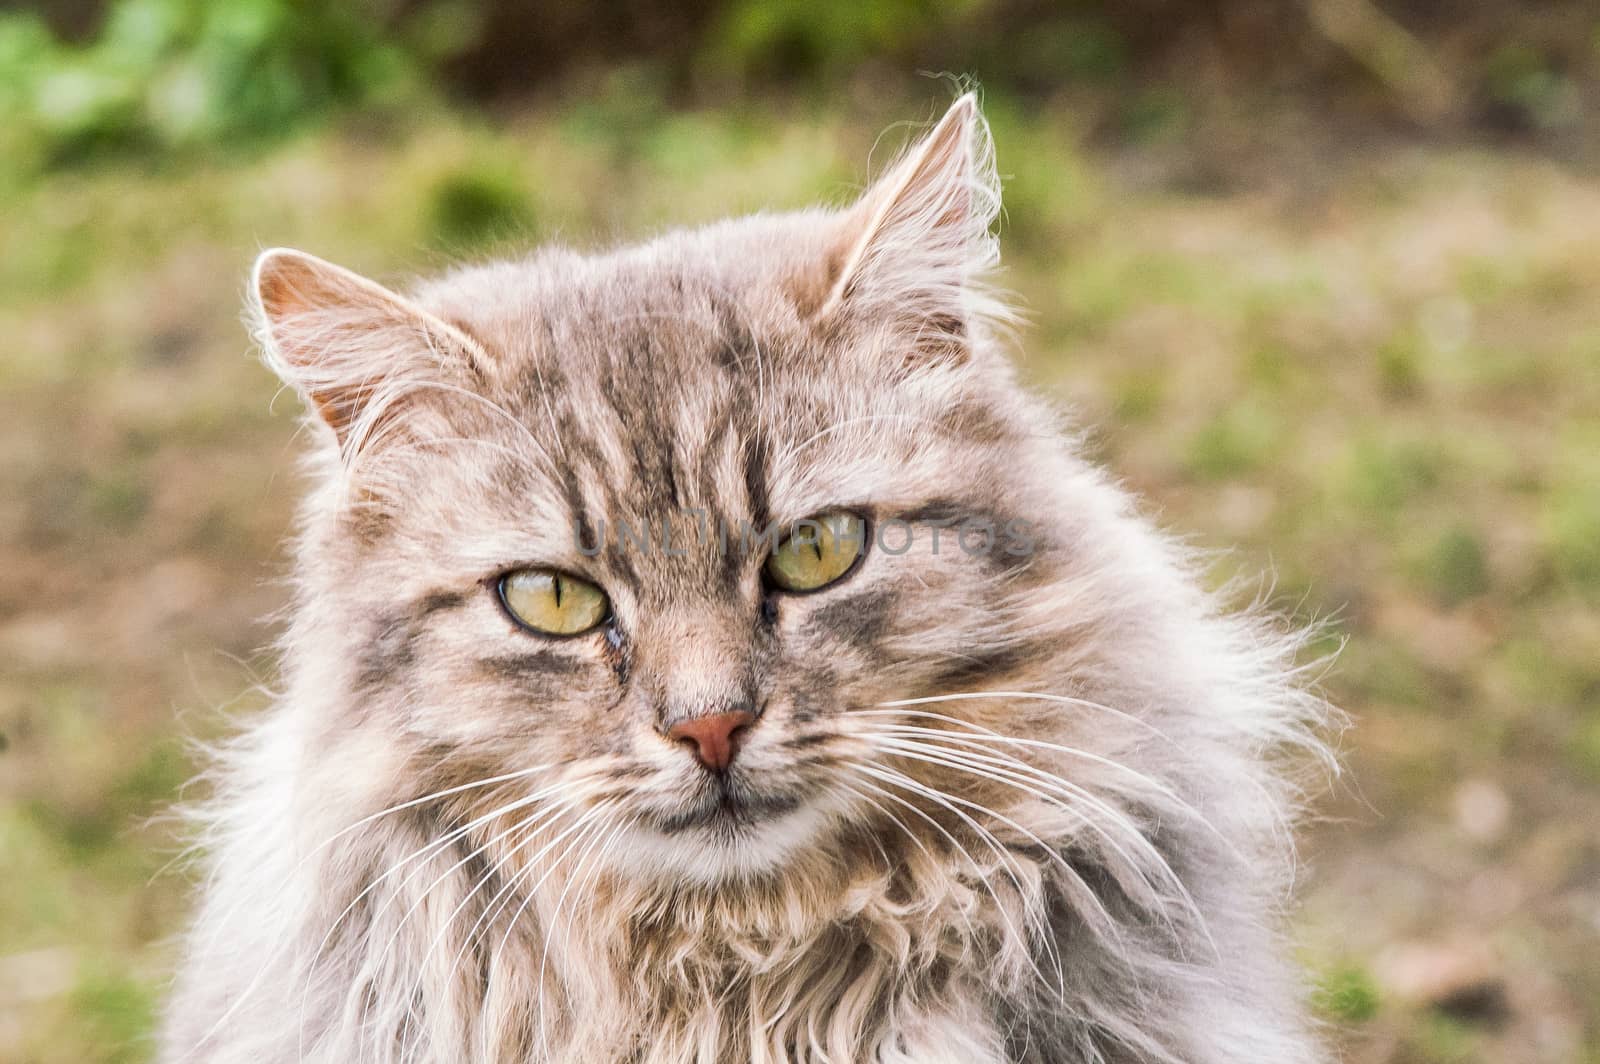 portrait of a beautiful fluffy cat closeup